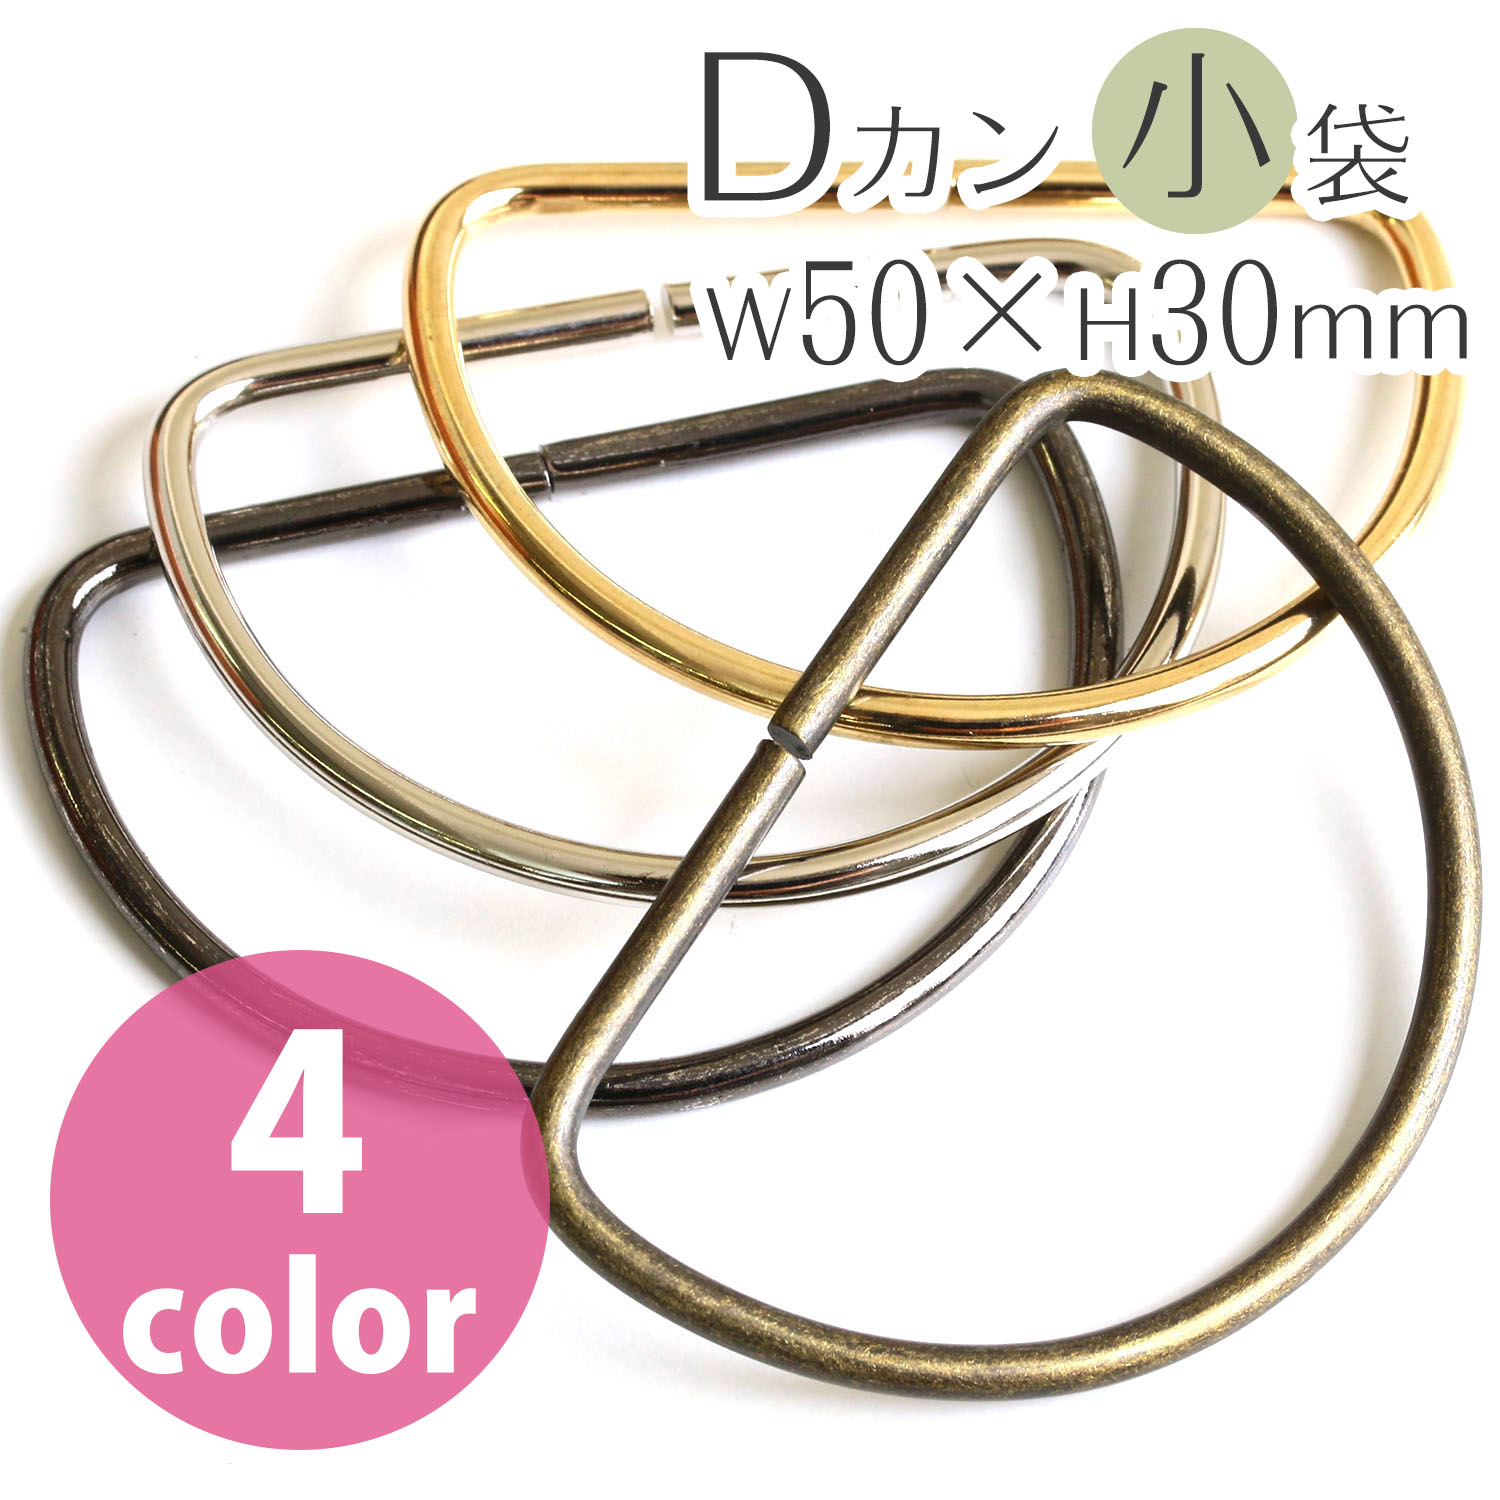 S22 D-Ring  50 x 30mm, diameter 3mm (bag)